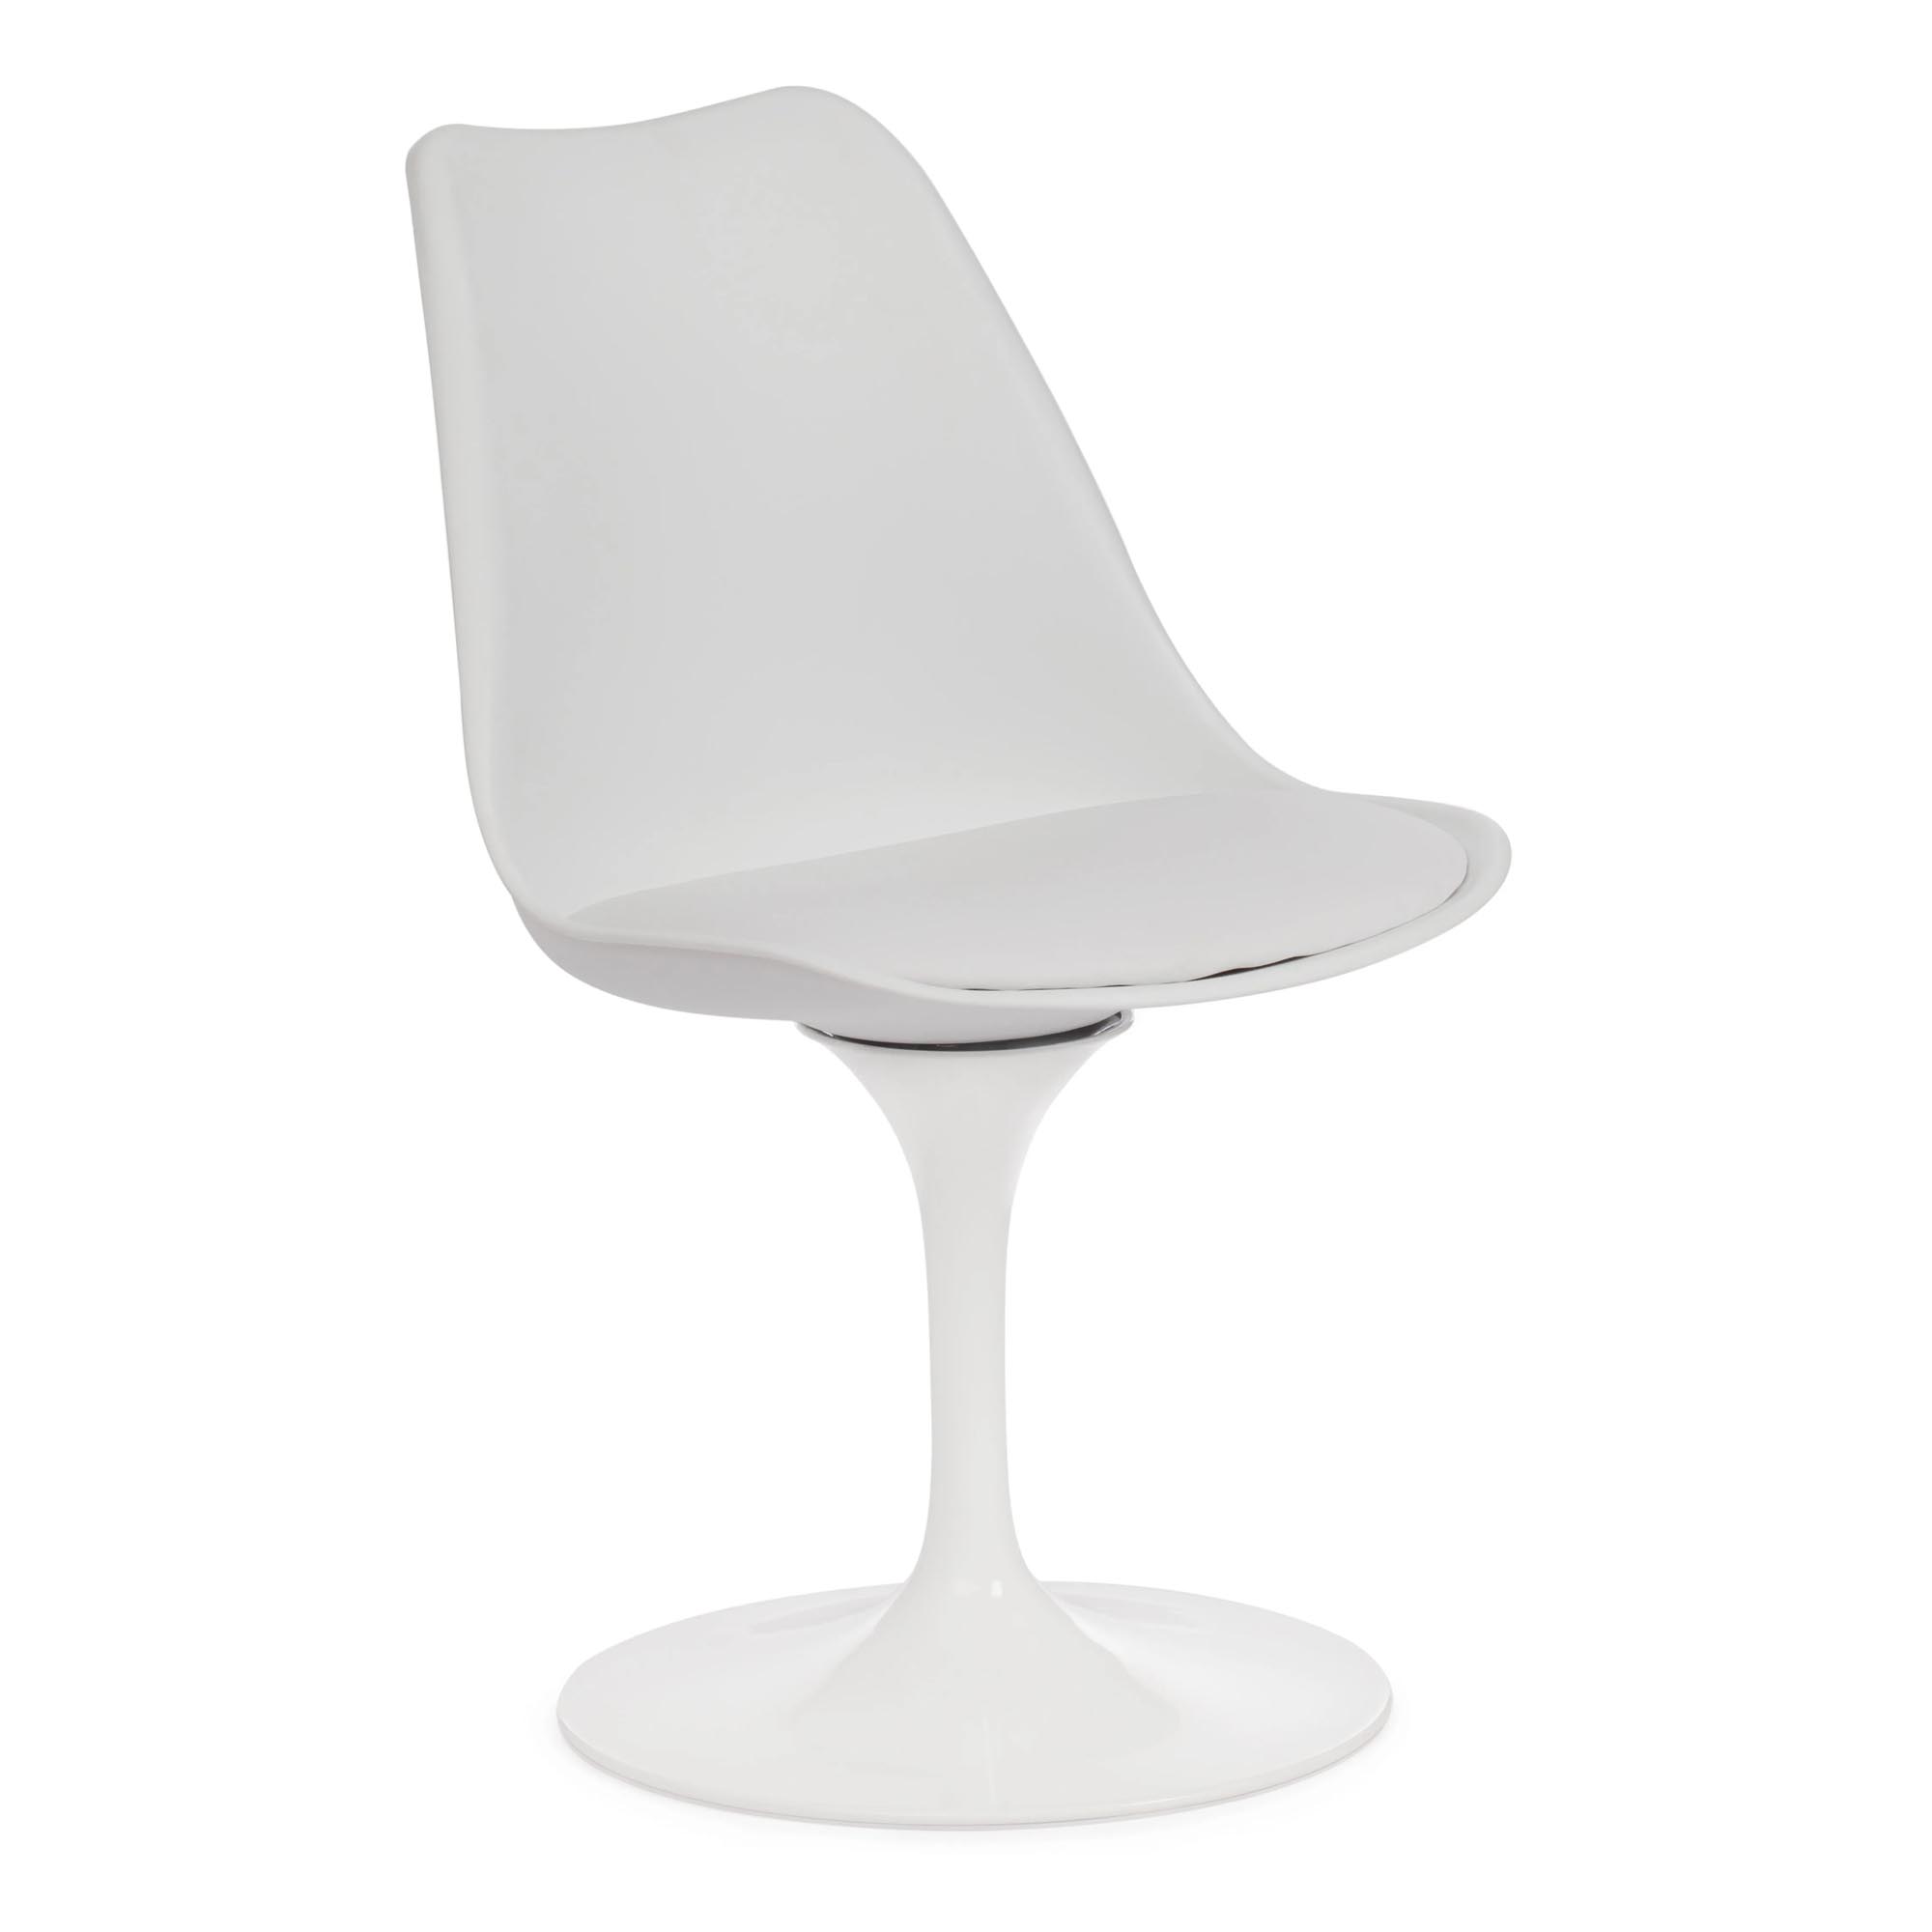 Стул TC Tulip fashion chair 55x48x81 см белый nordic dining chair wrought iron chairs modern backrest study desk chaise bedroom home стул sillas de comedor стулья для кухни